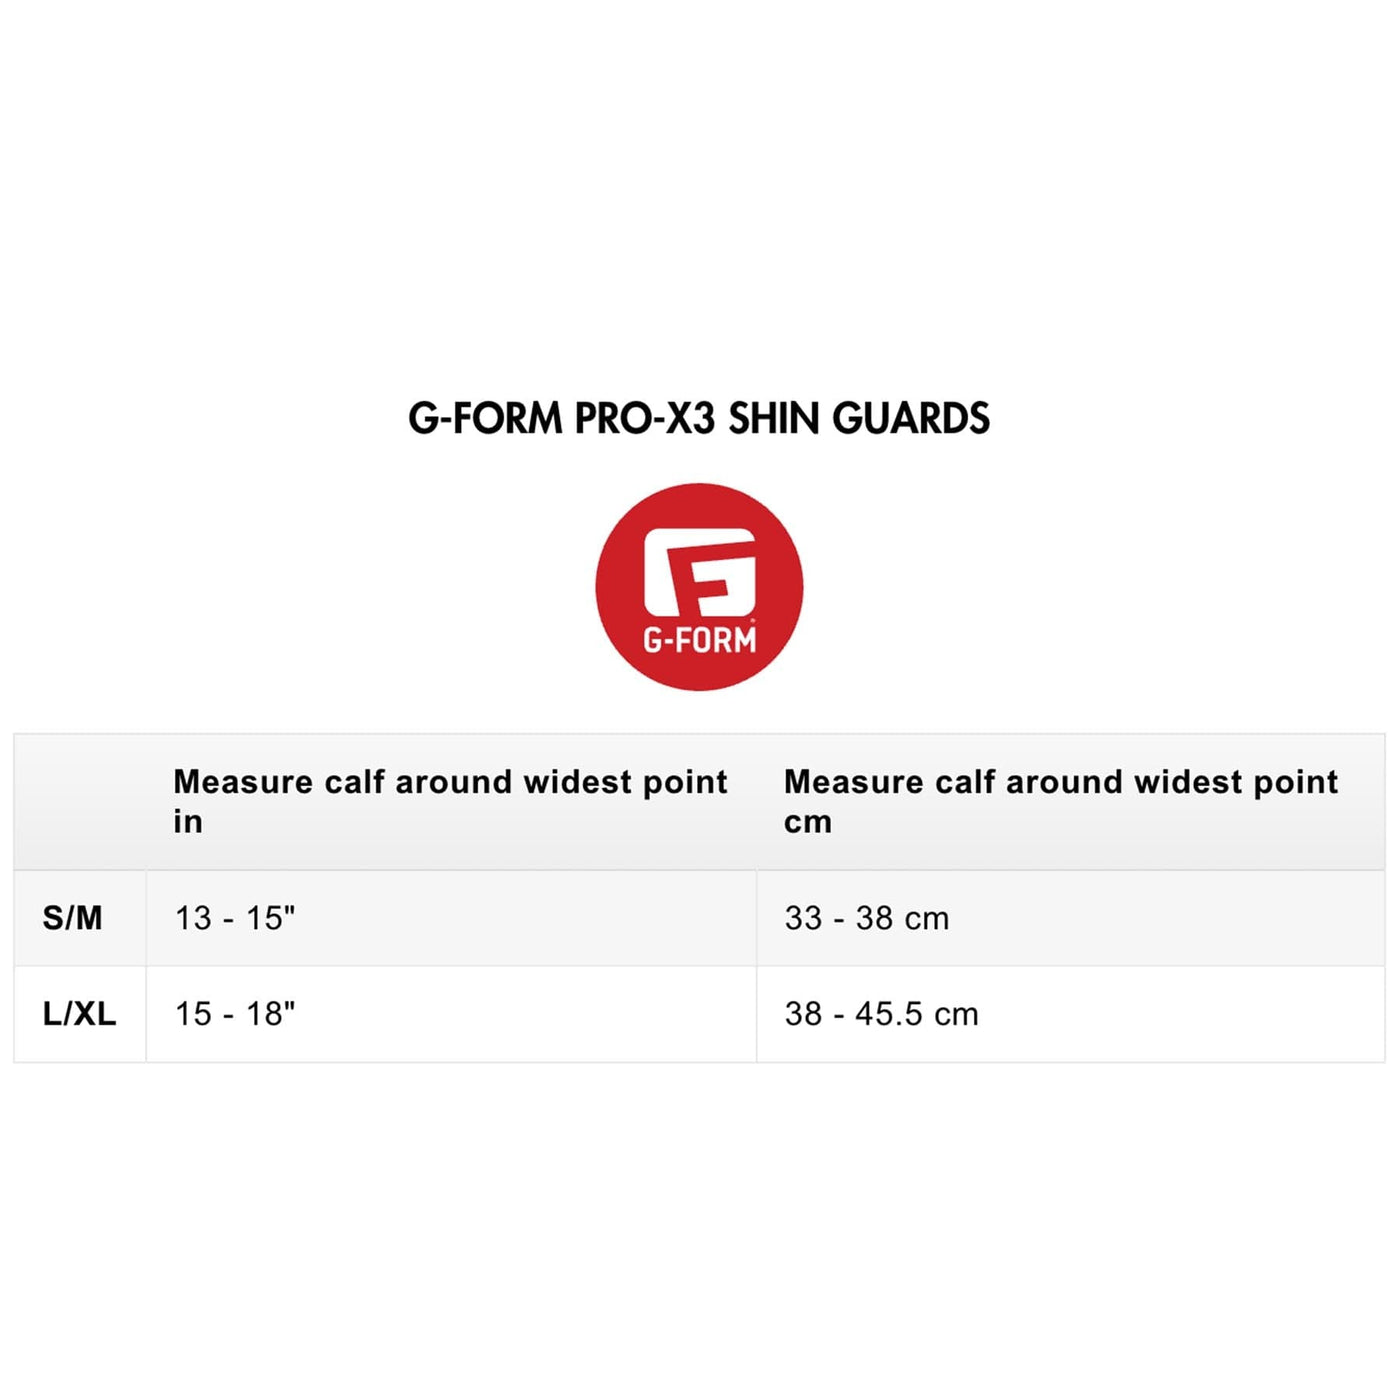 G-FORM PRO-X3 SHIN GUARDS SIZE CHART